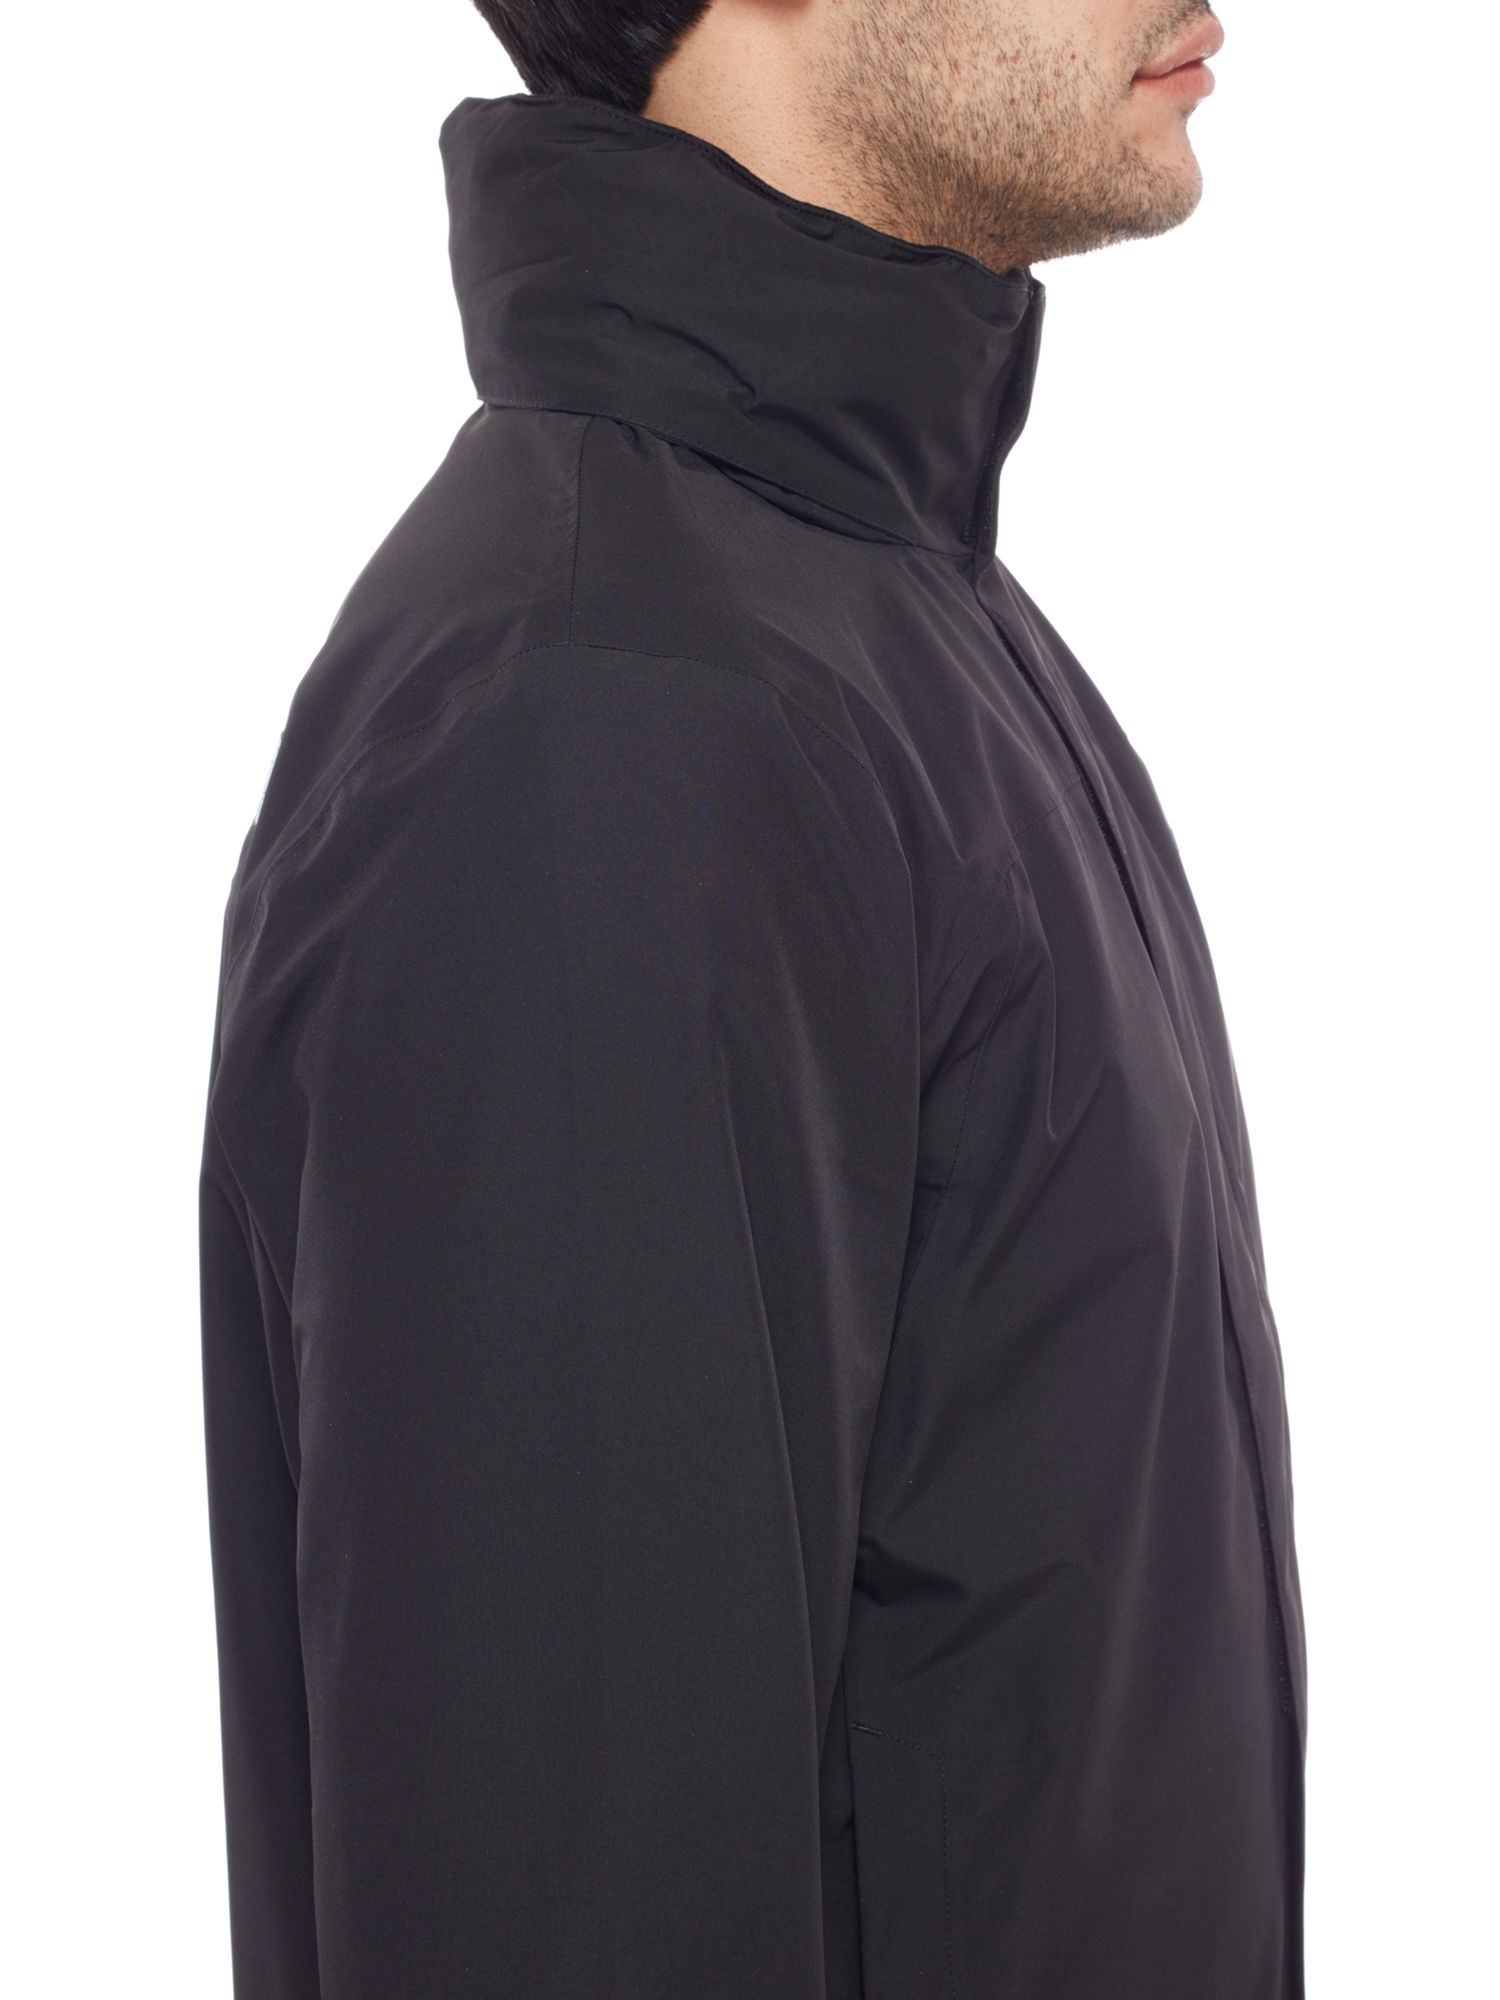 Buy The North Face Sangro Men's Waterproof Jacket Online at johnlewis.com